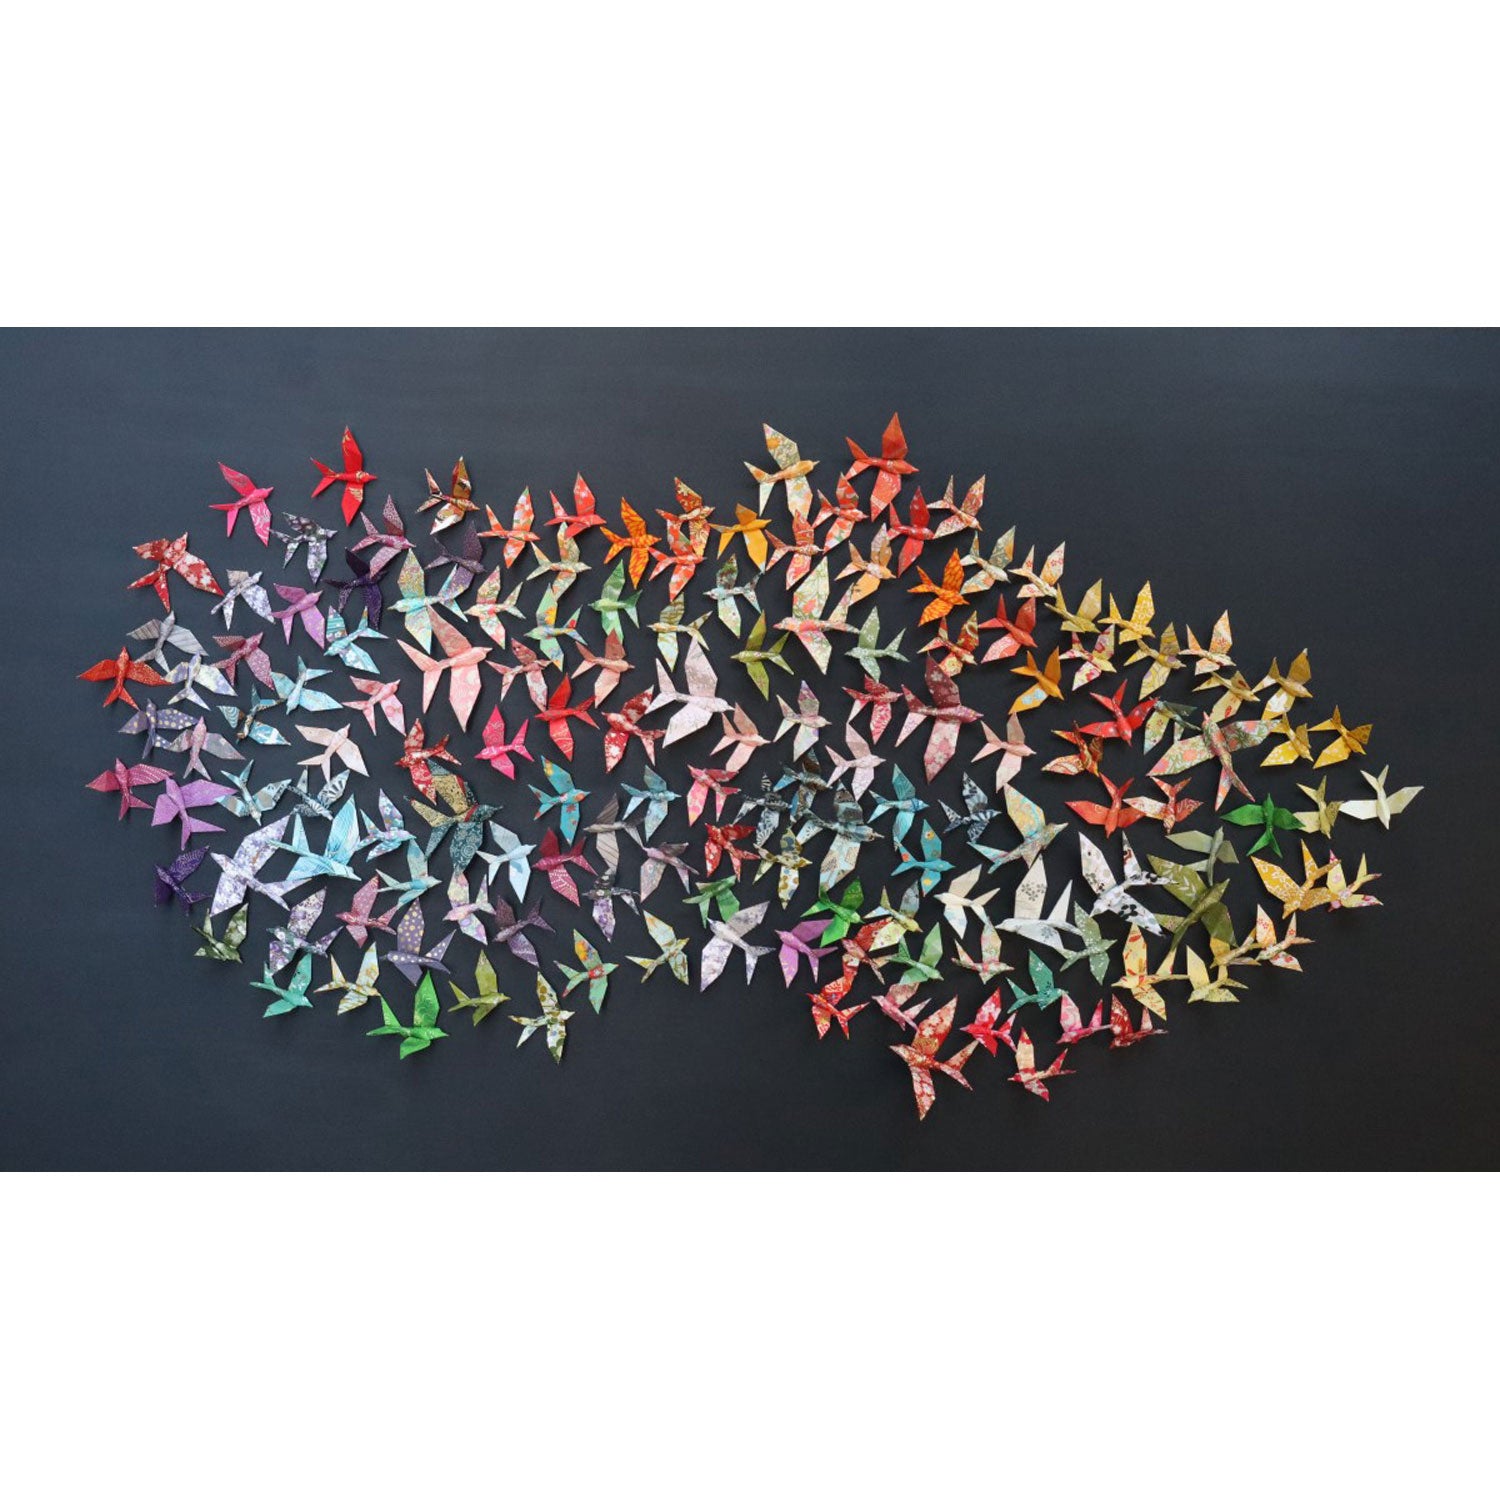 Andrew Wang - Aerial Dance, 30" x 52"